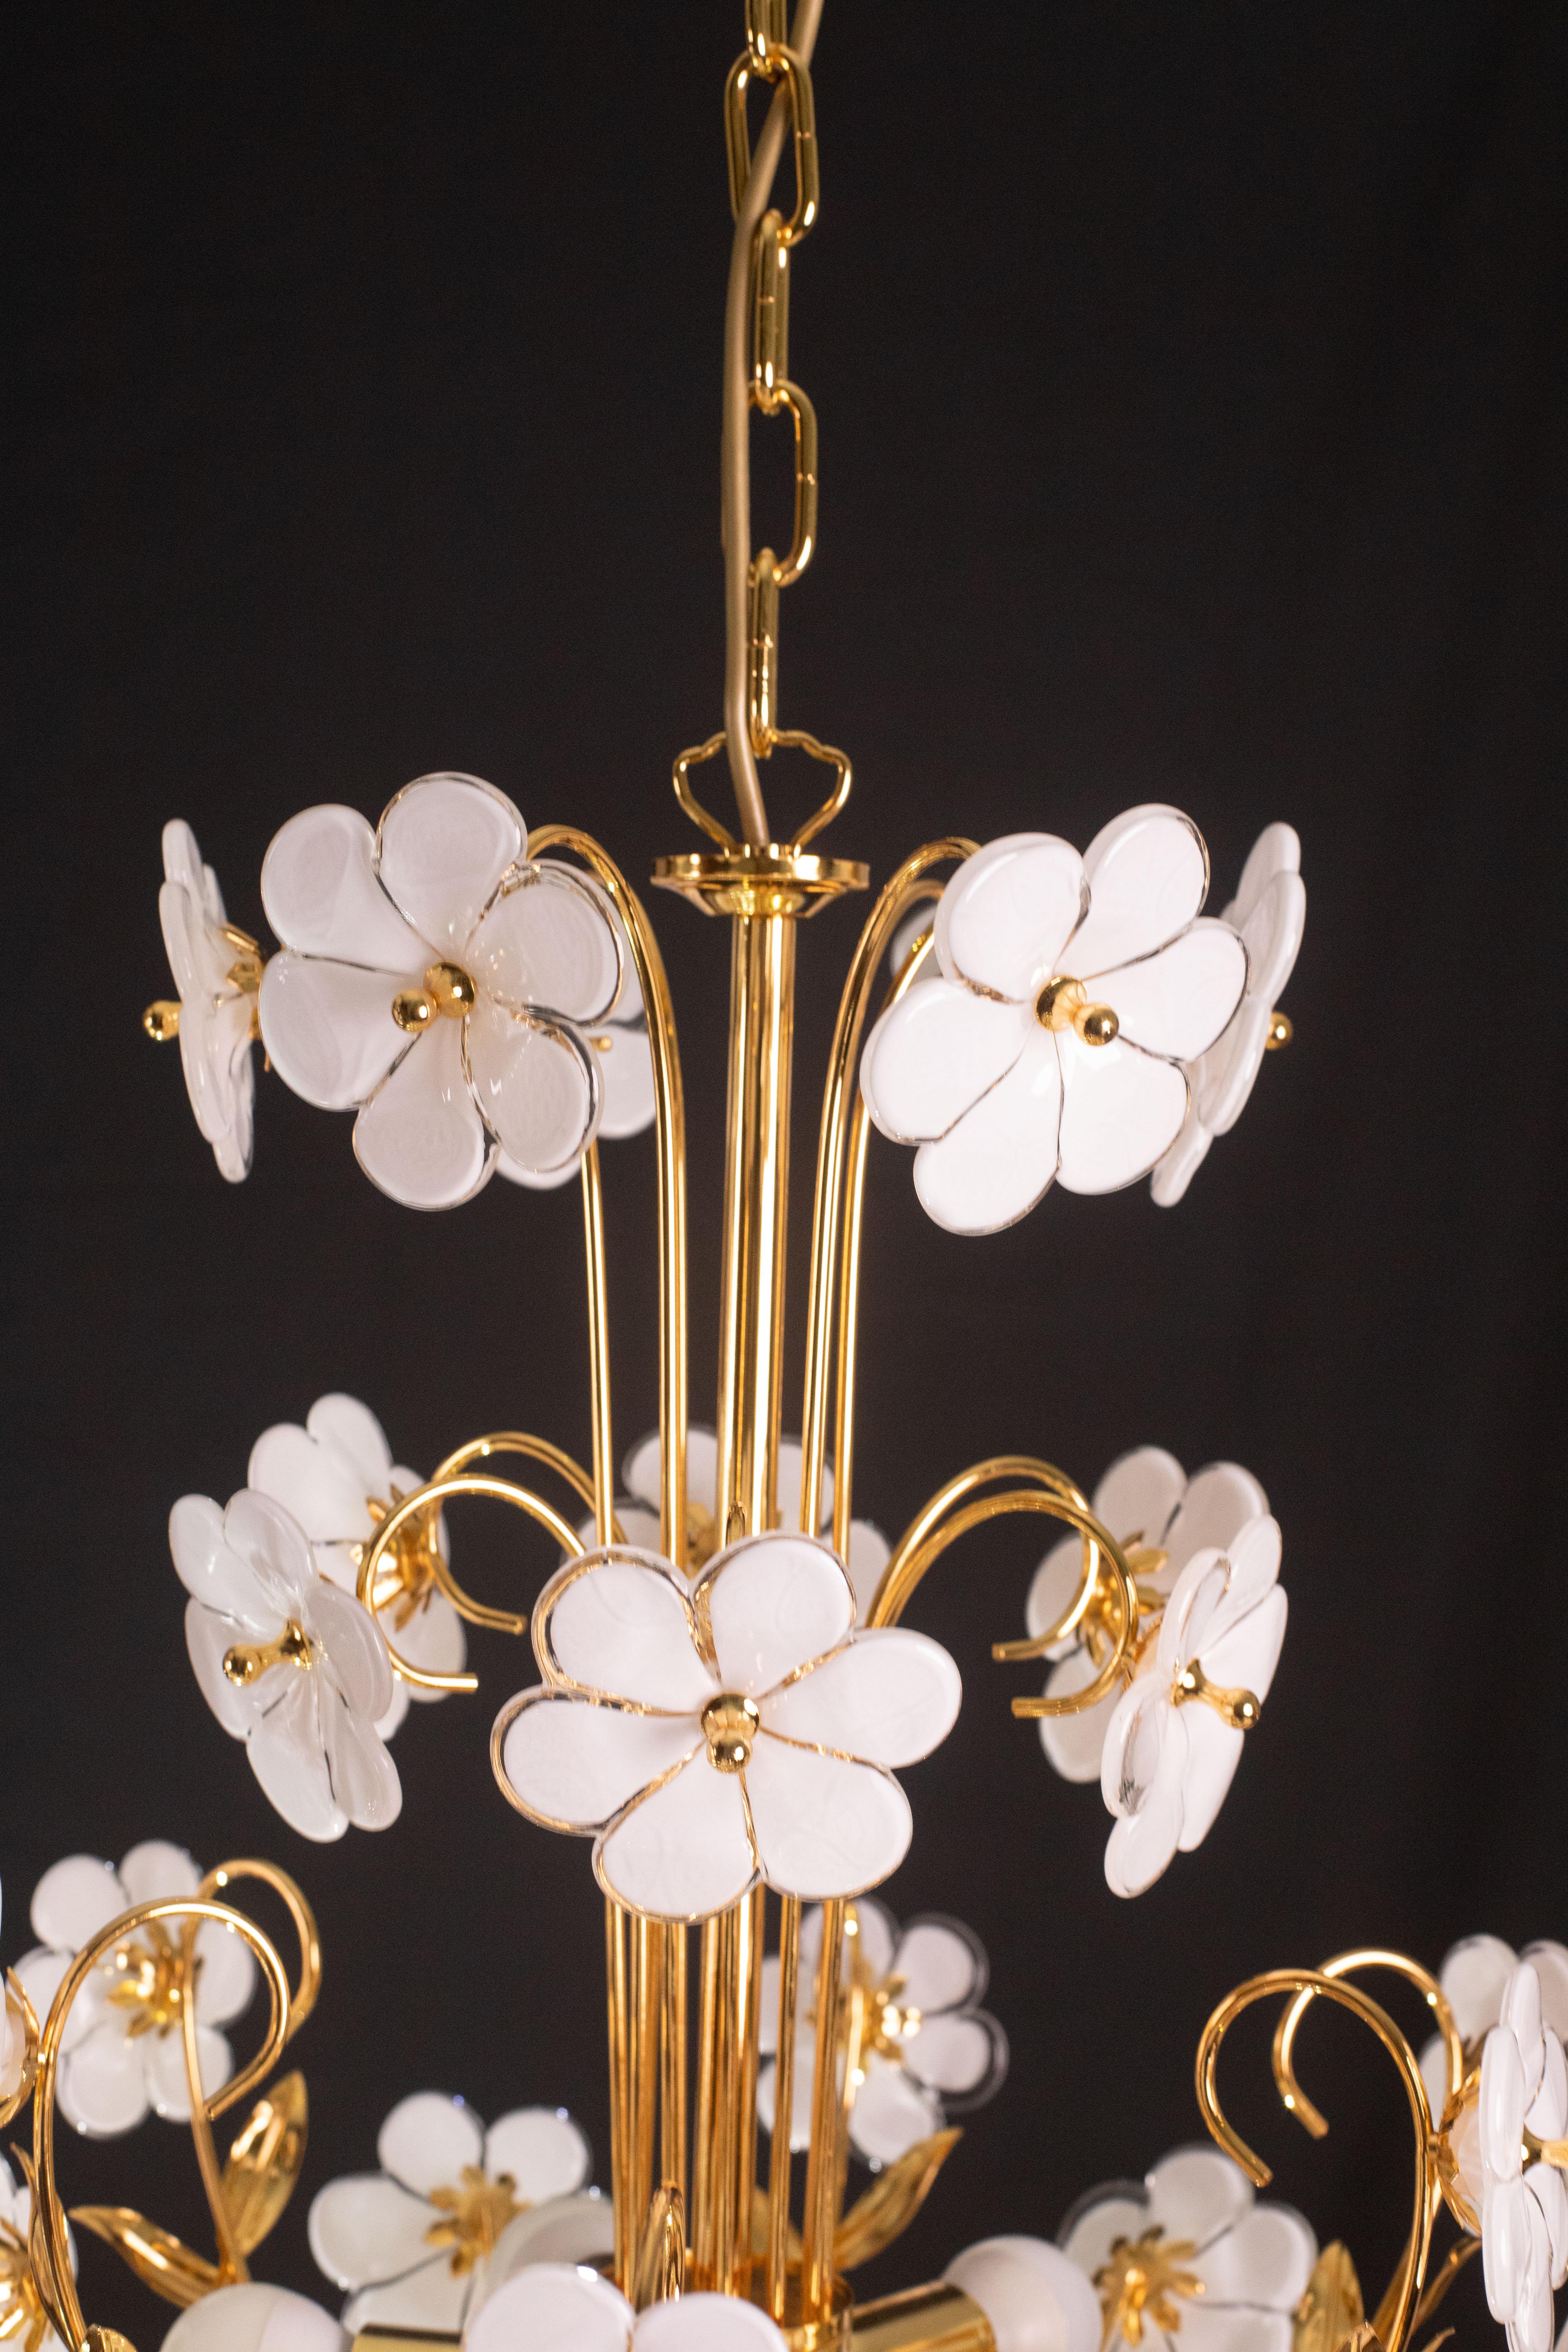 Spectacular Murano Chandelier Full of White Flowers, new bath gold, 1980s For Sale 2